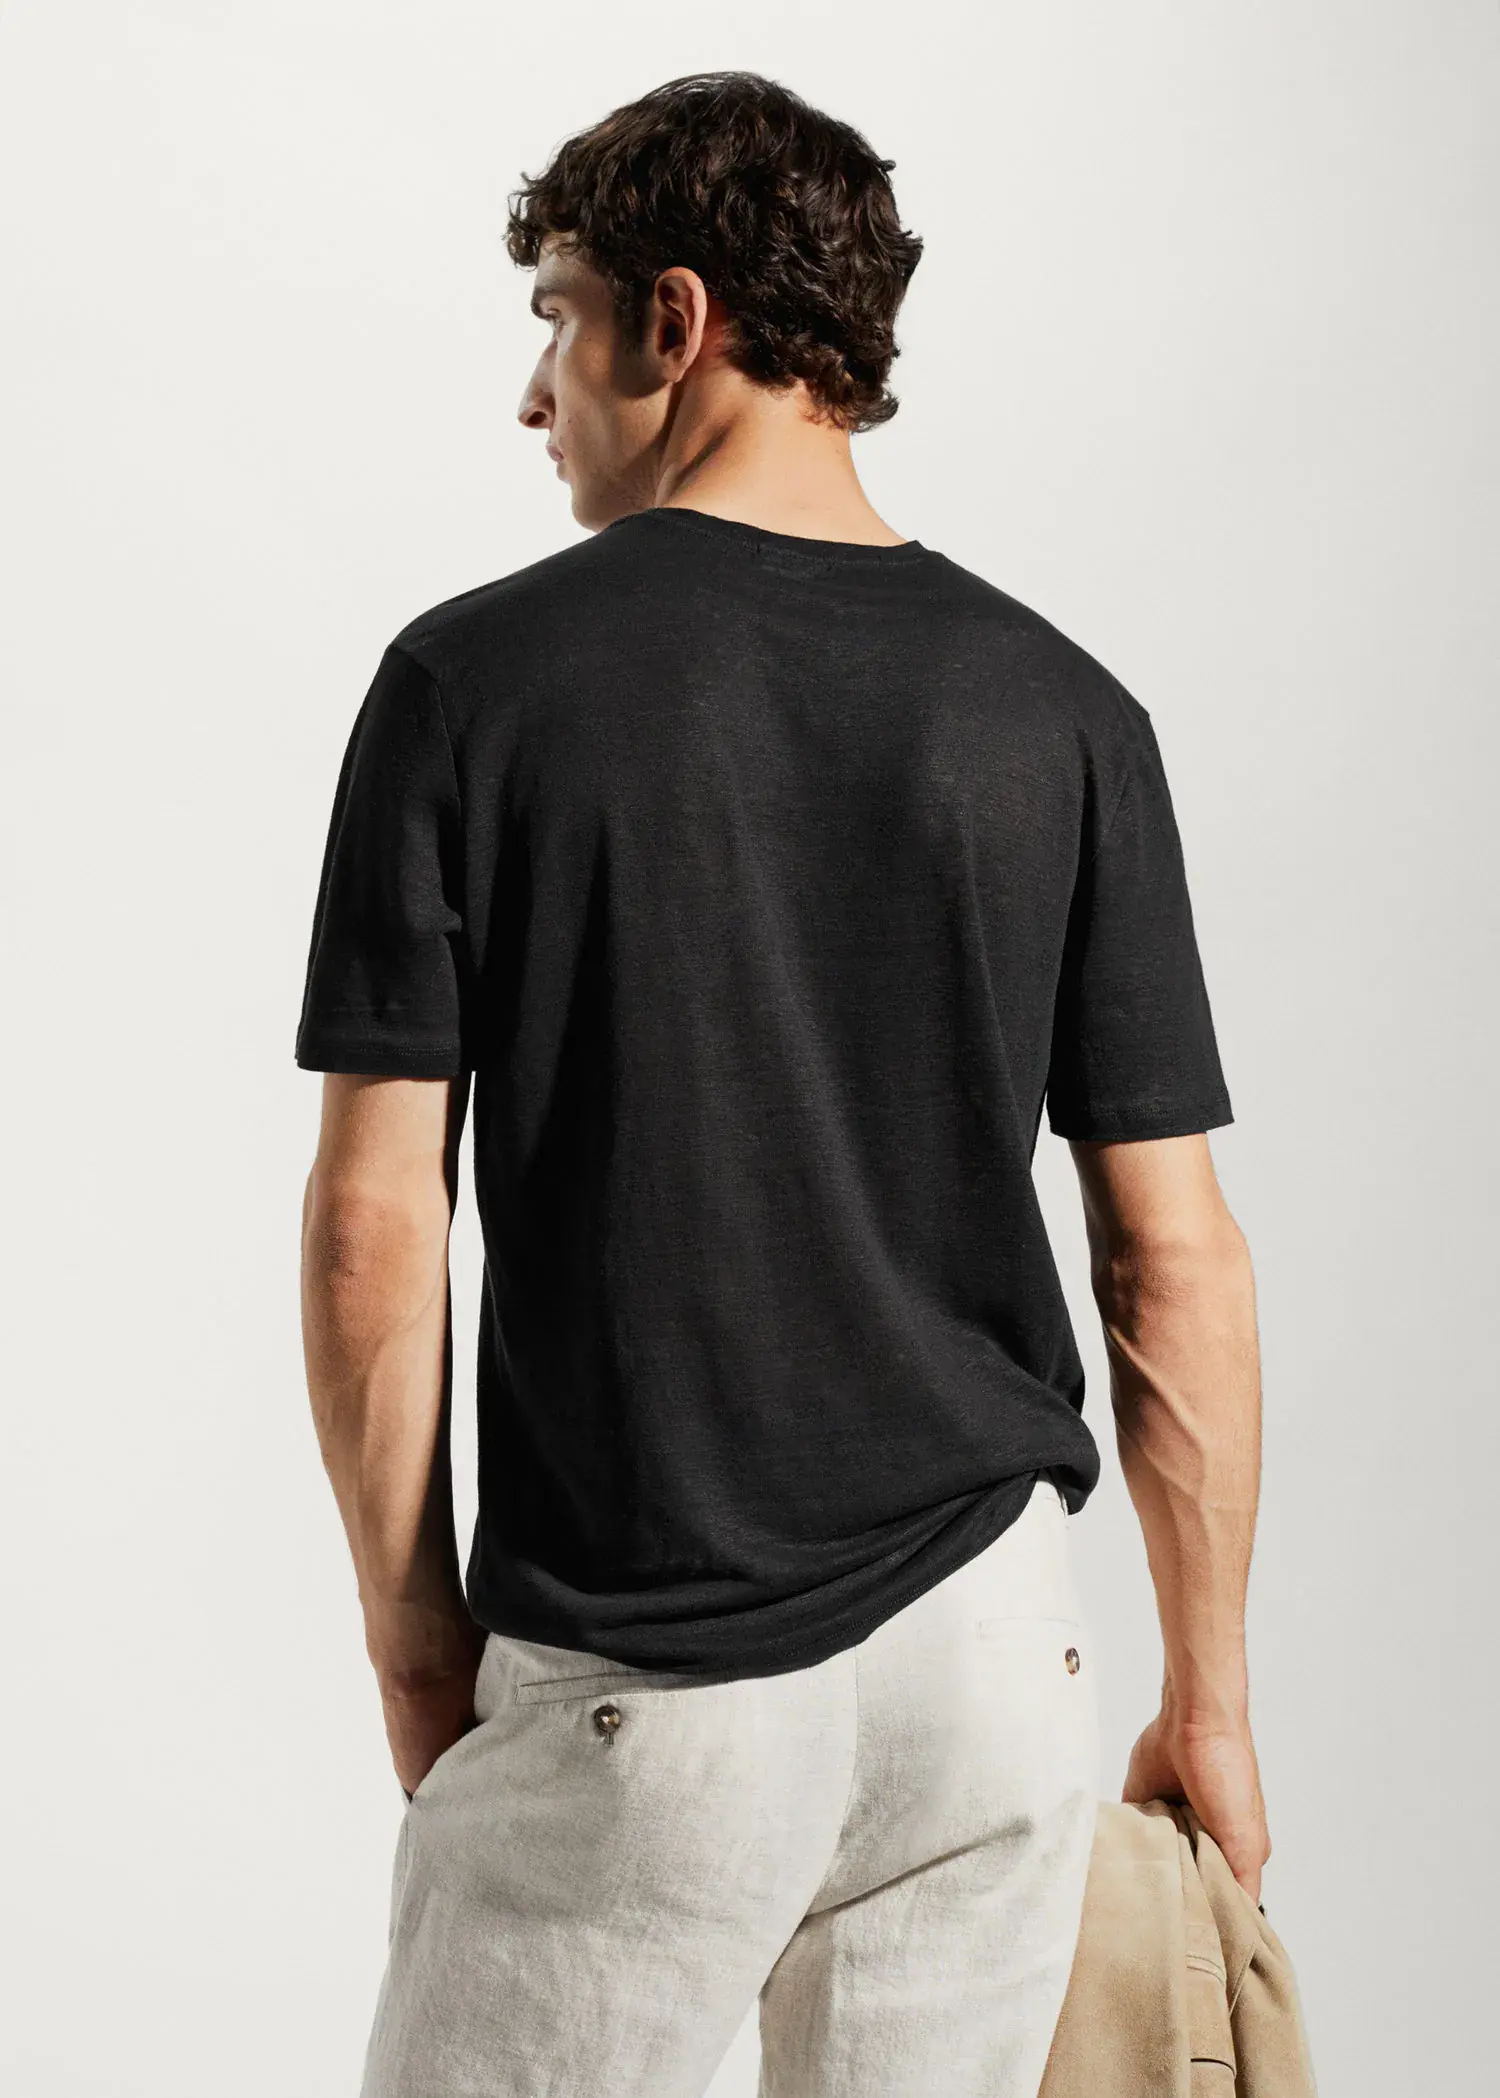 Mango 100% linen slim-fit t-shirt. a man wearing a black shirt and white shorts. 